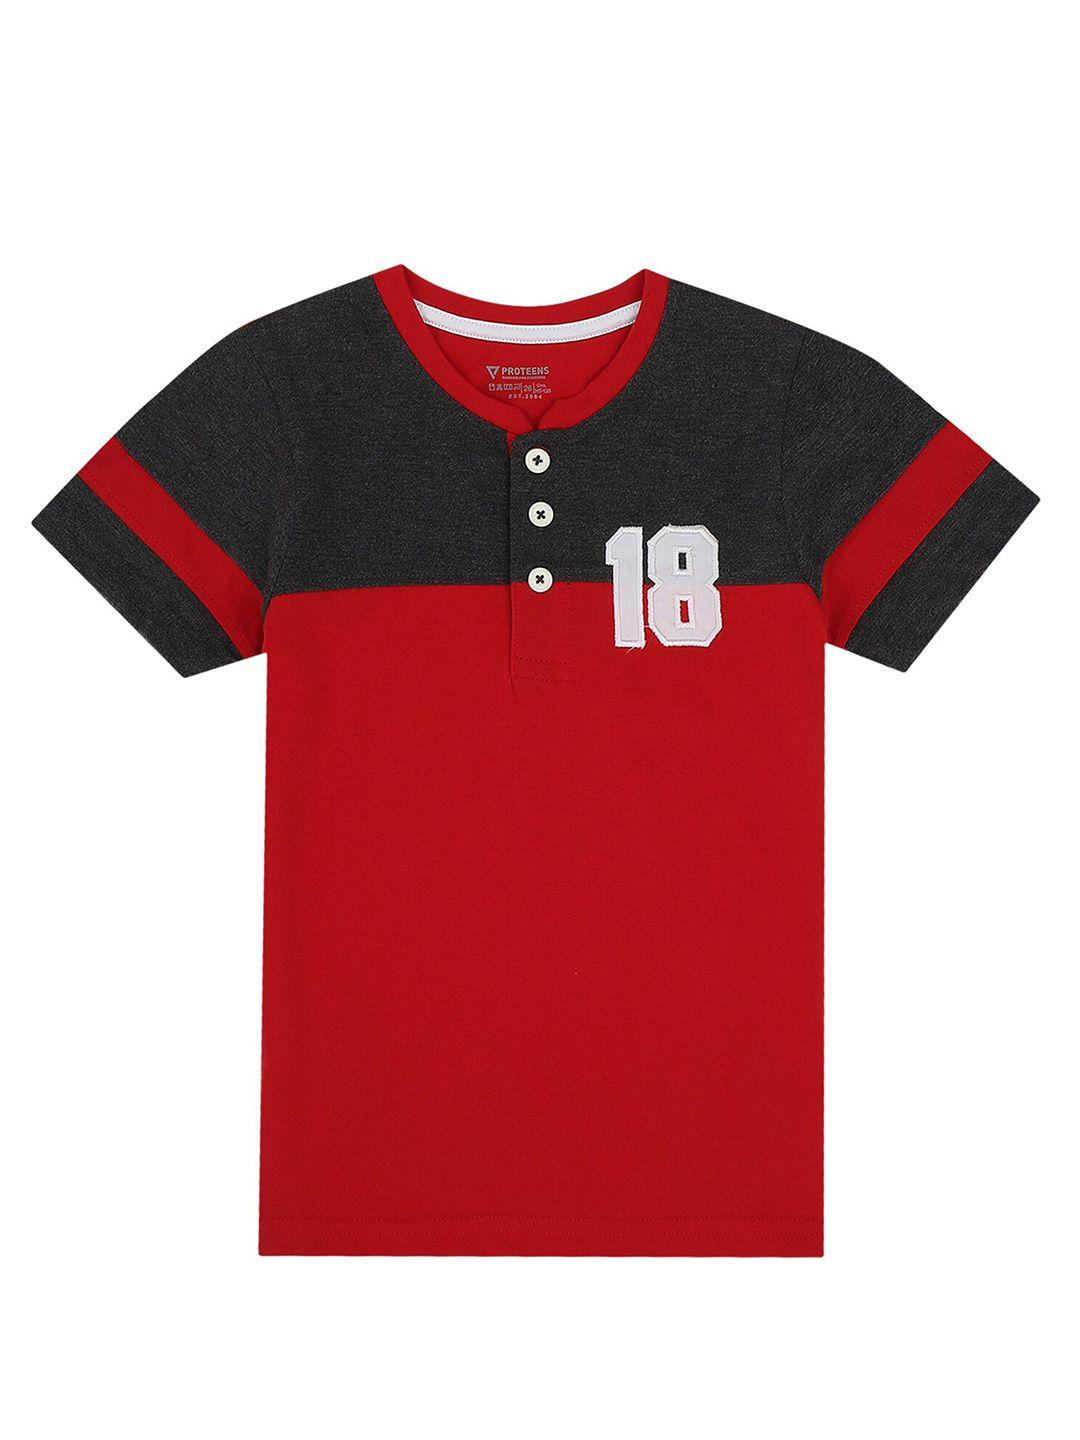 proteens boys red & black colourblocked t-shirt